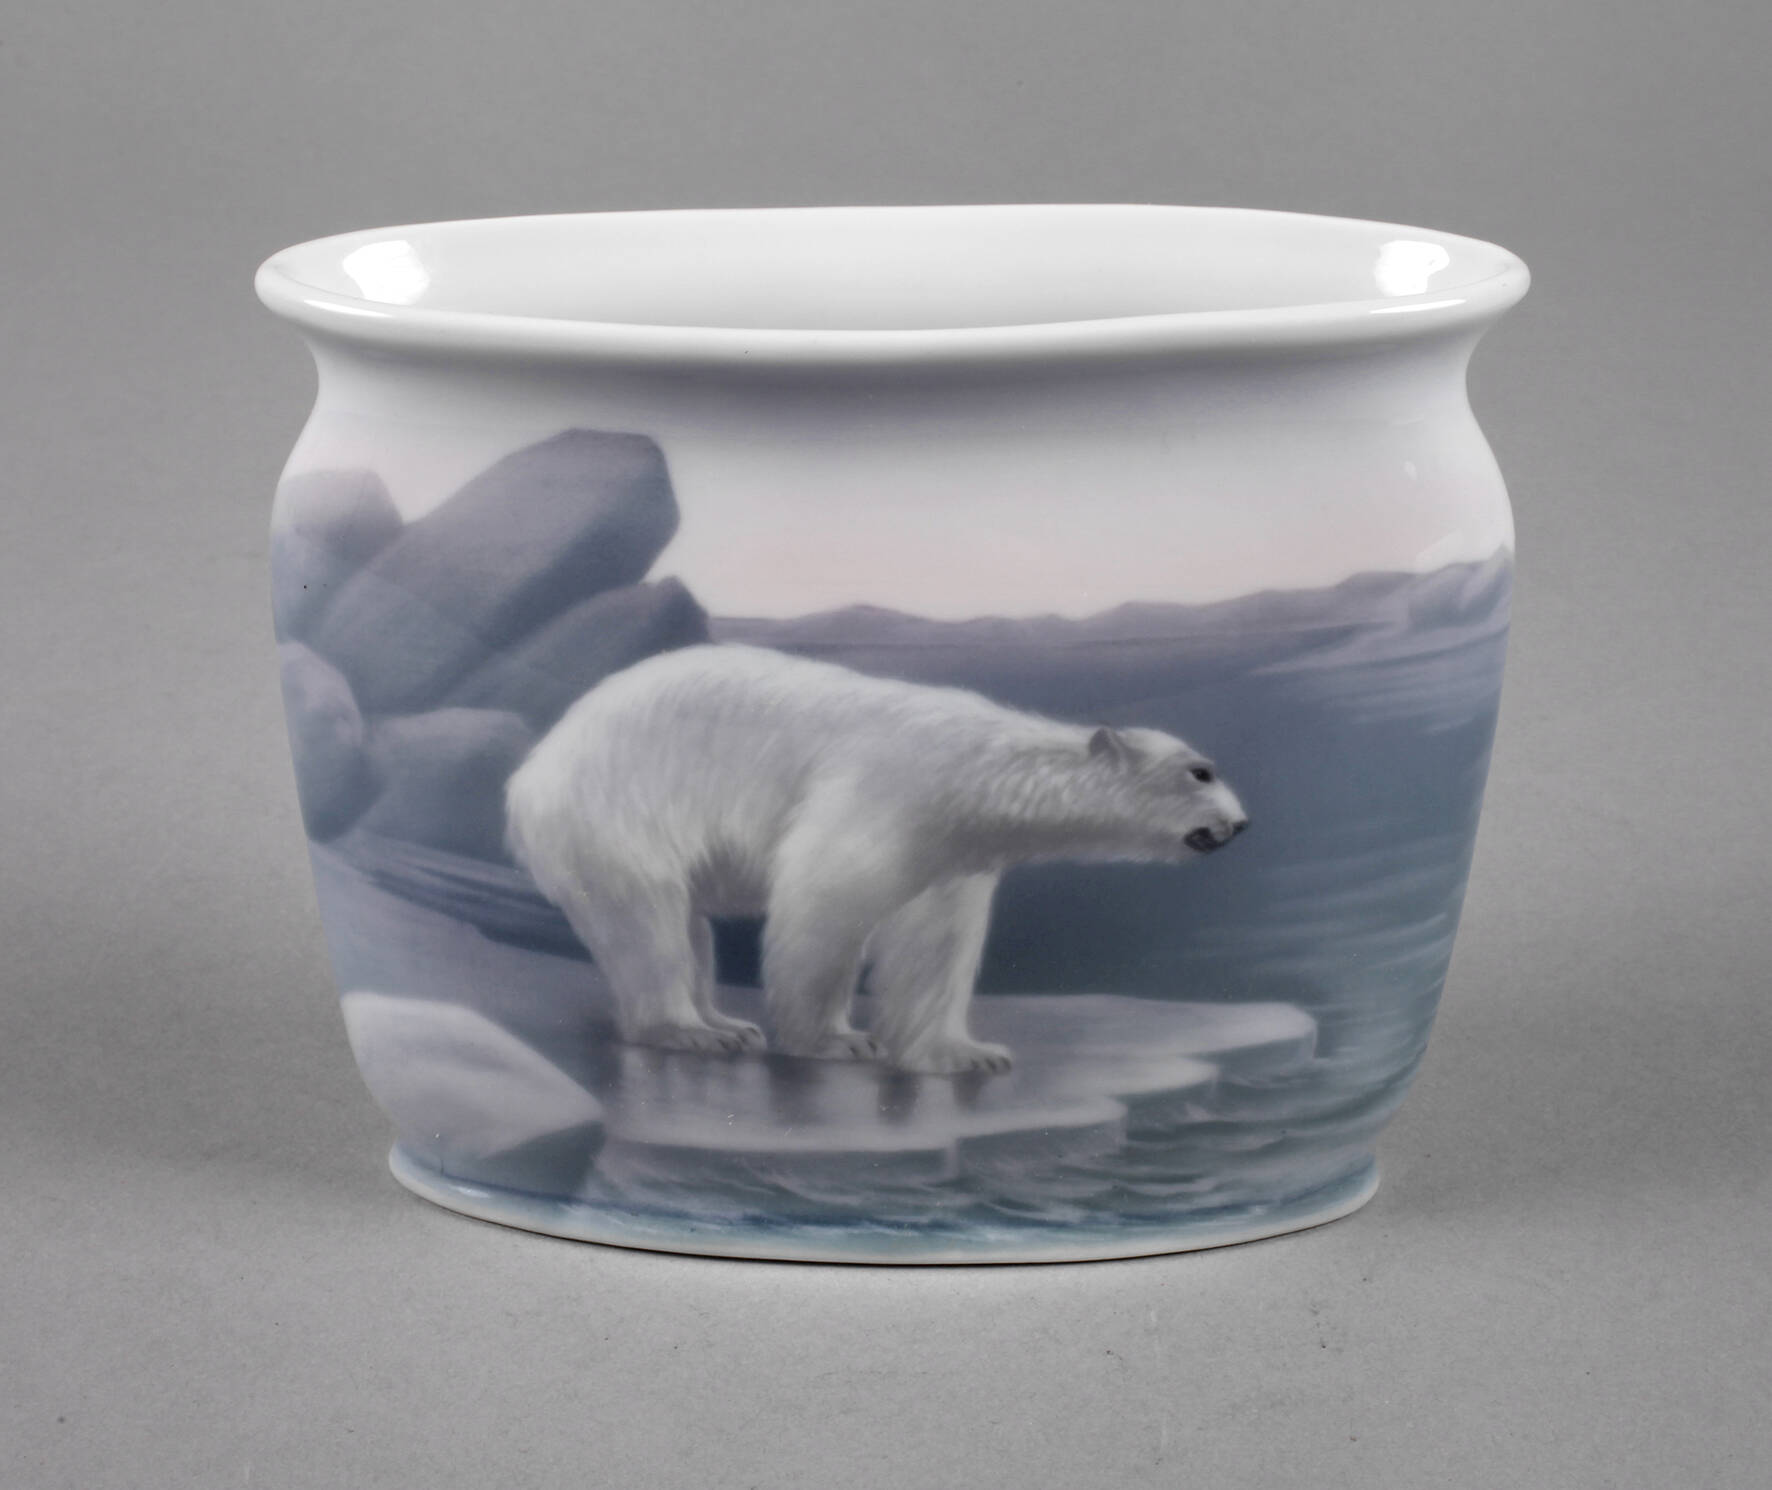 Kaestner Vase mit Eisbärenmotiv